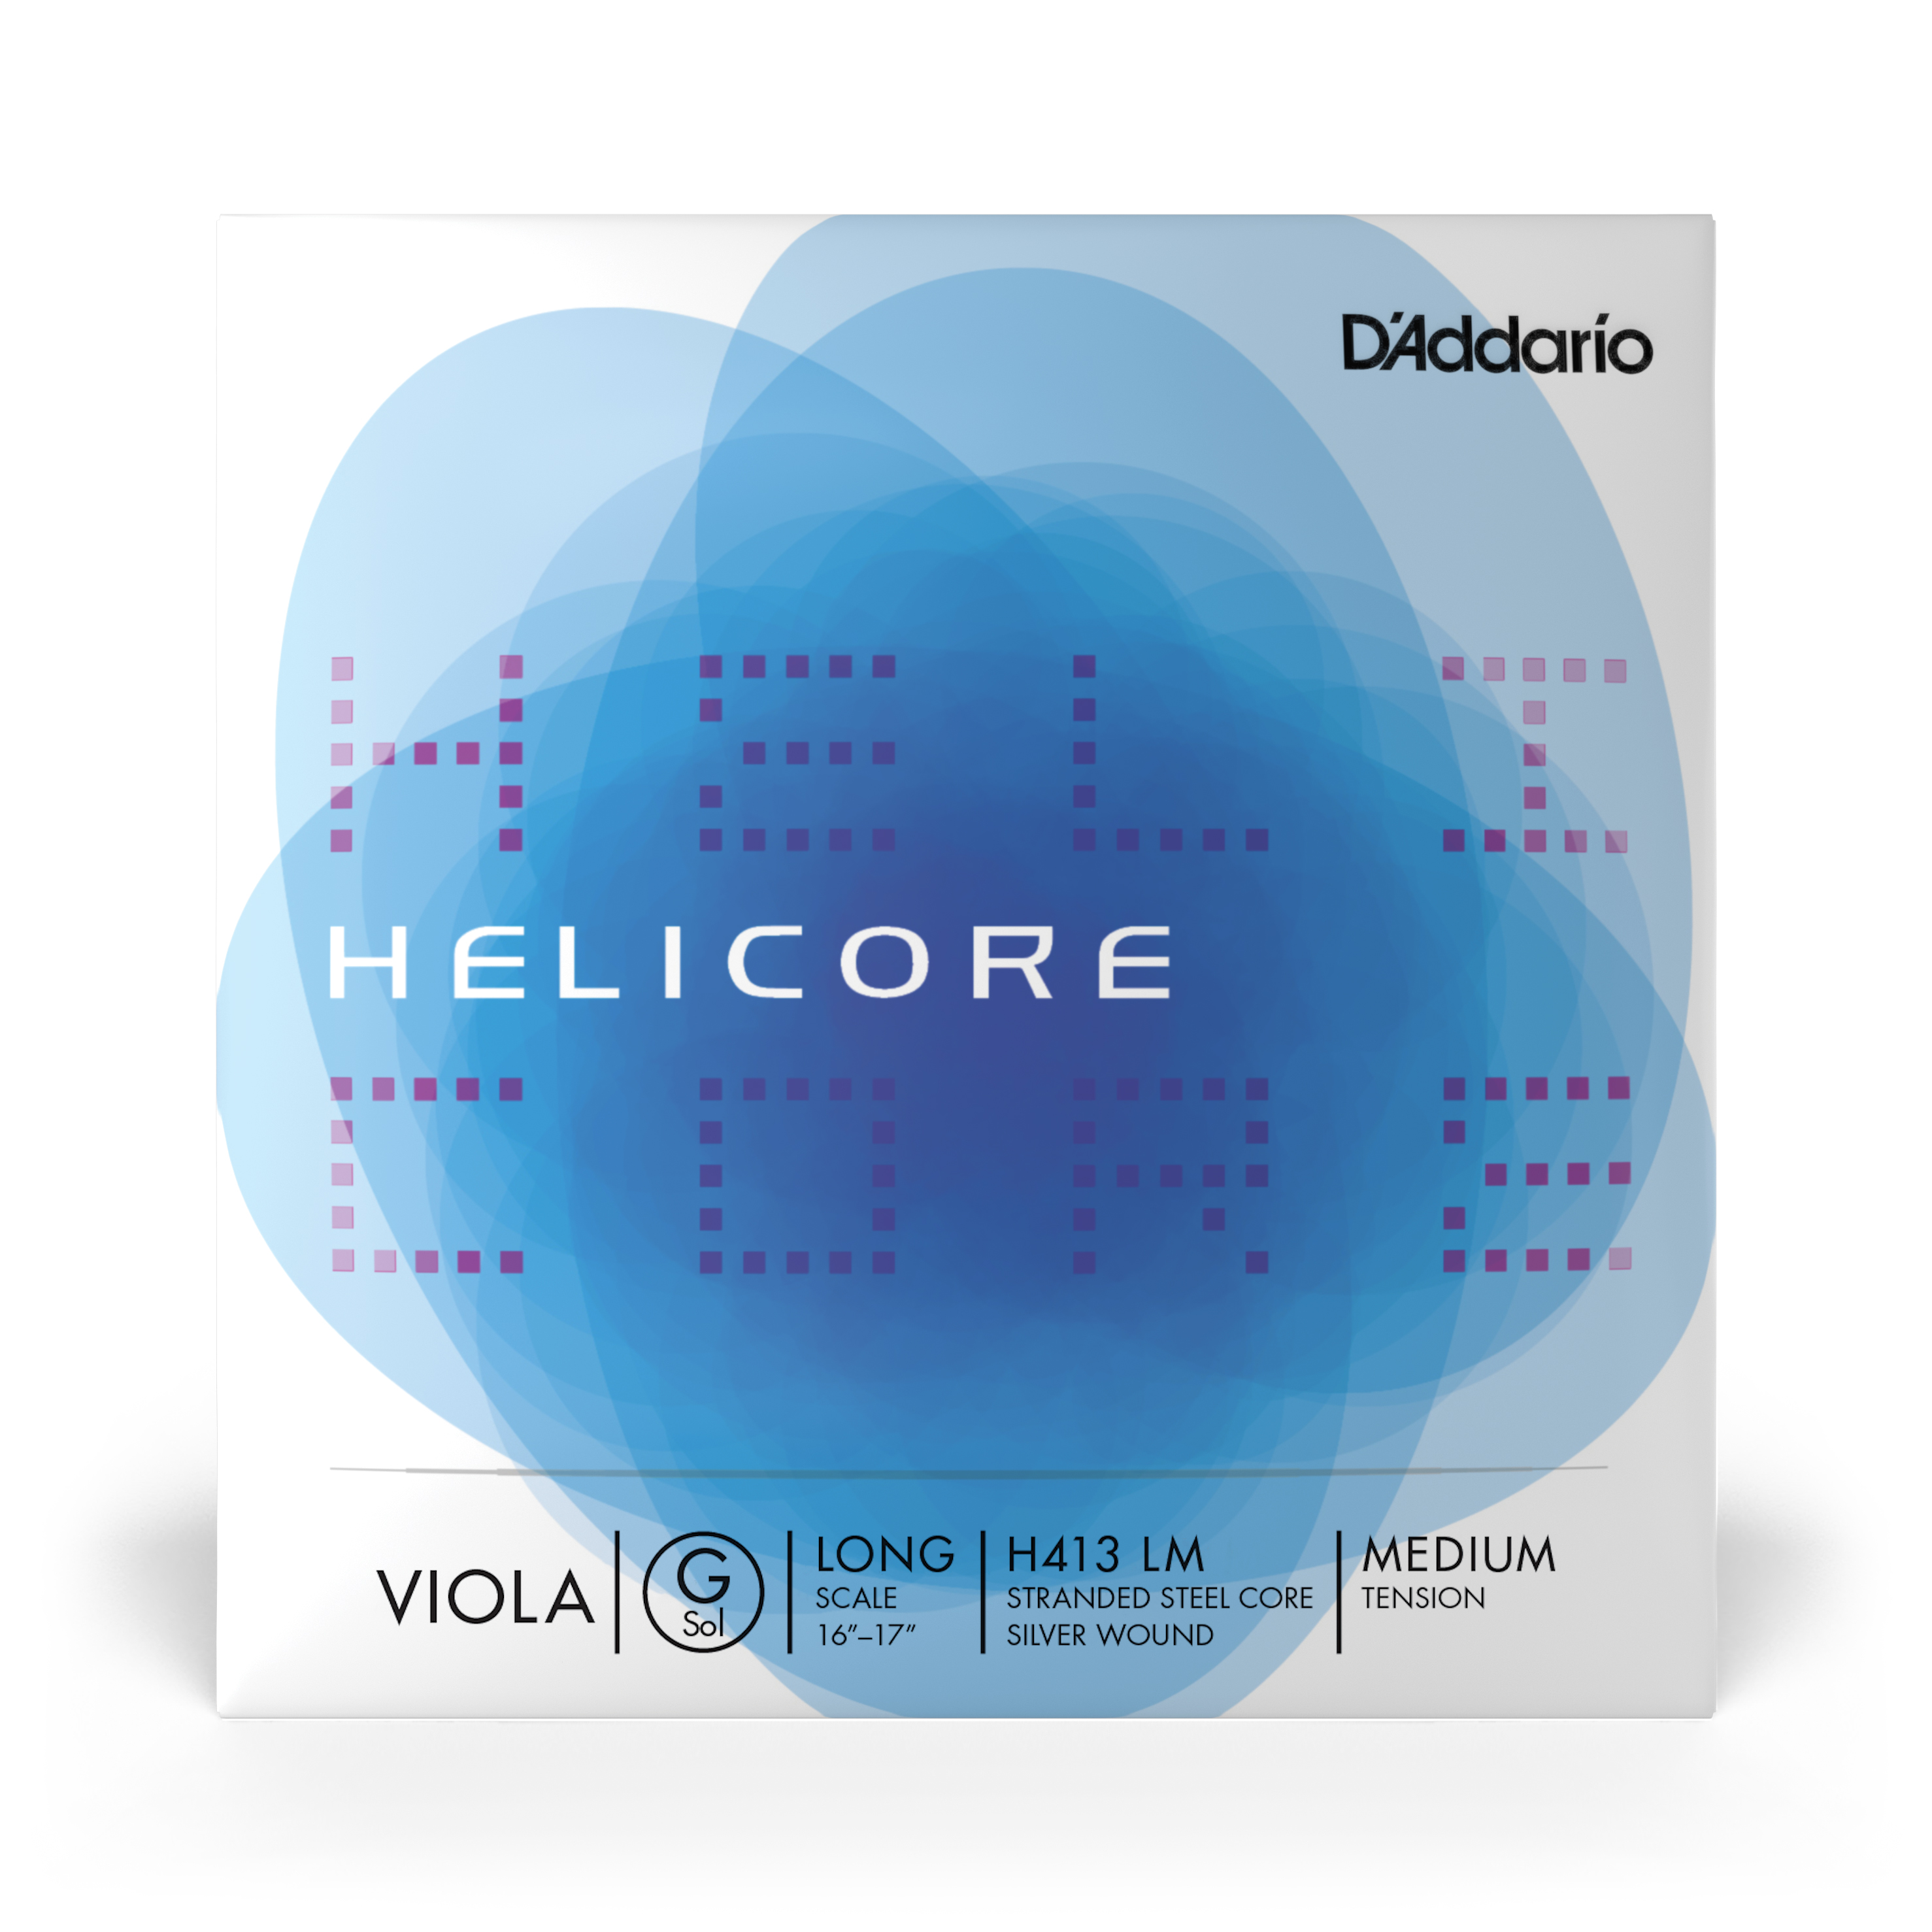 Daddario orchestral it H413 lm corda singola sol d'addario helicore per viola, long scale, tensione media